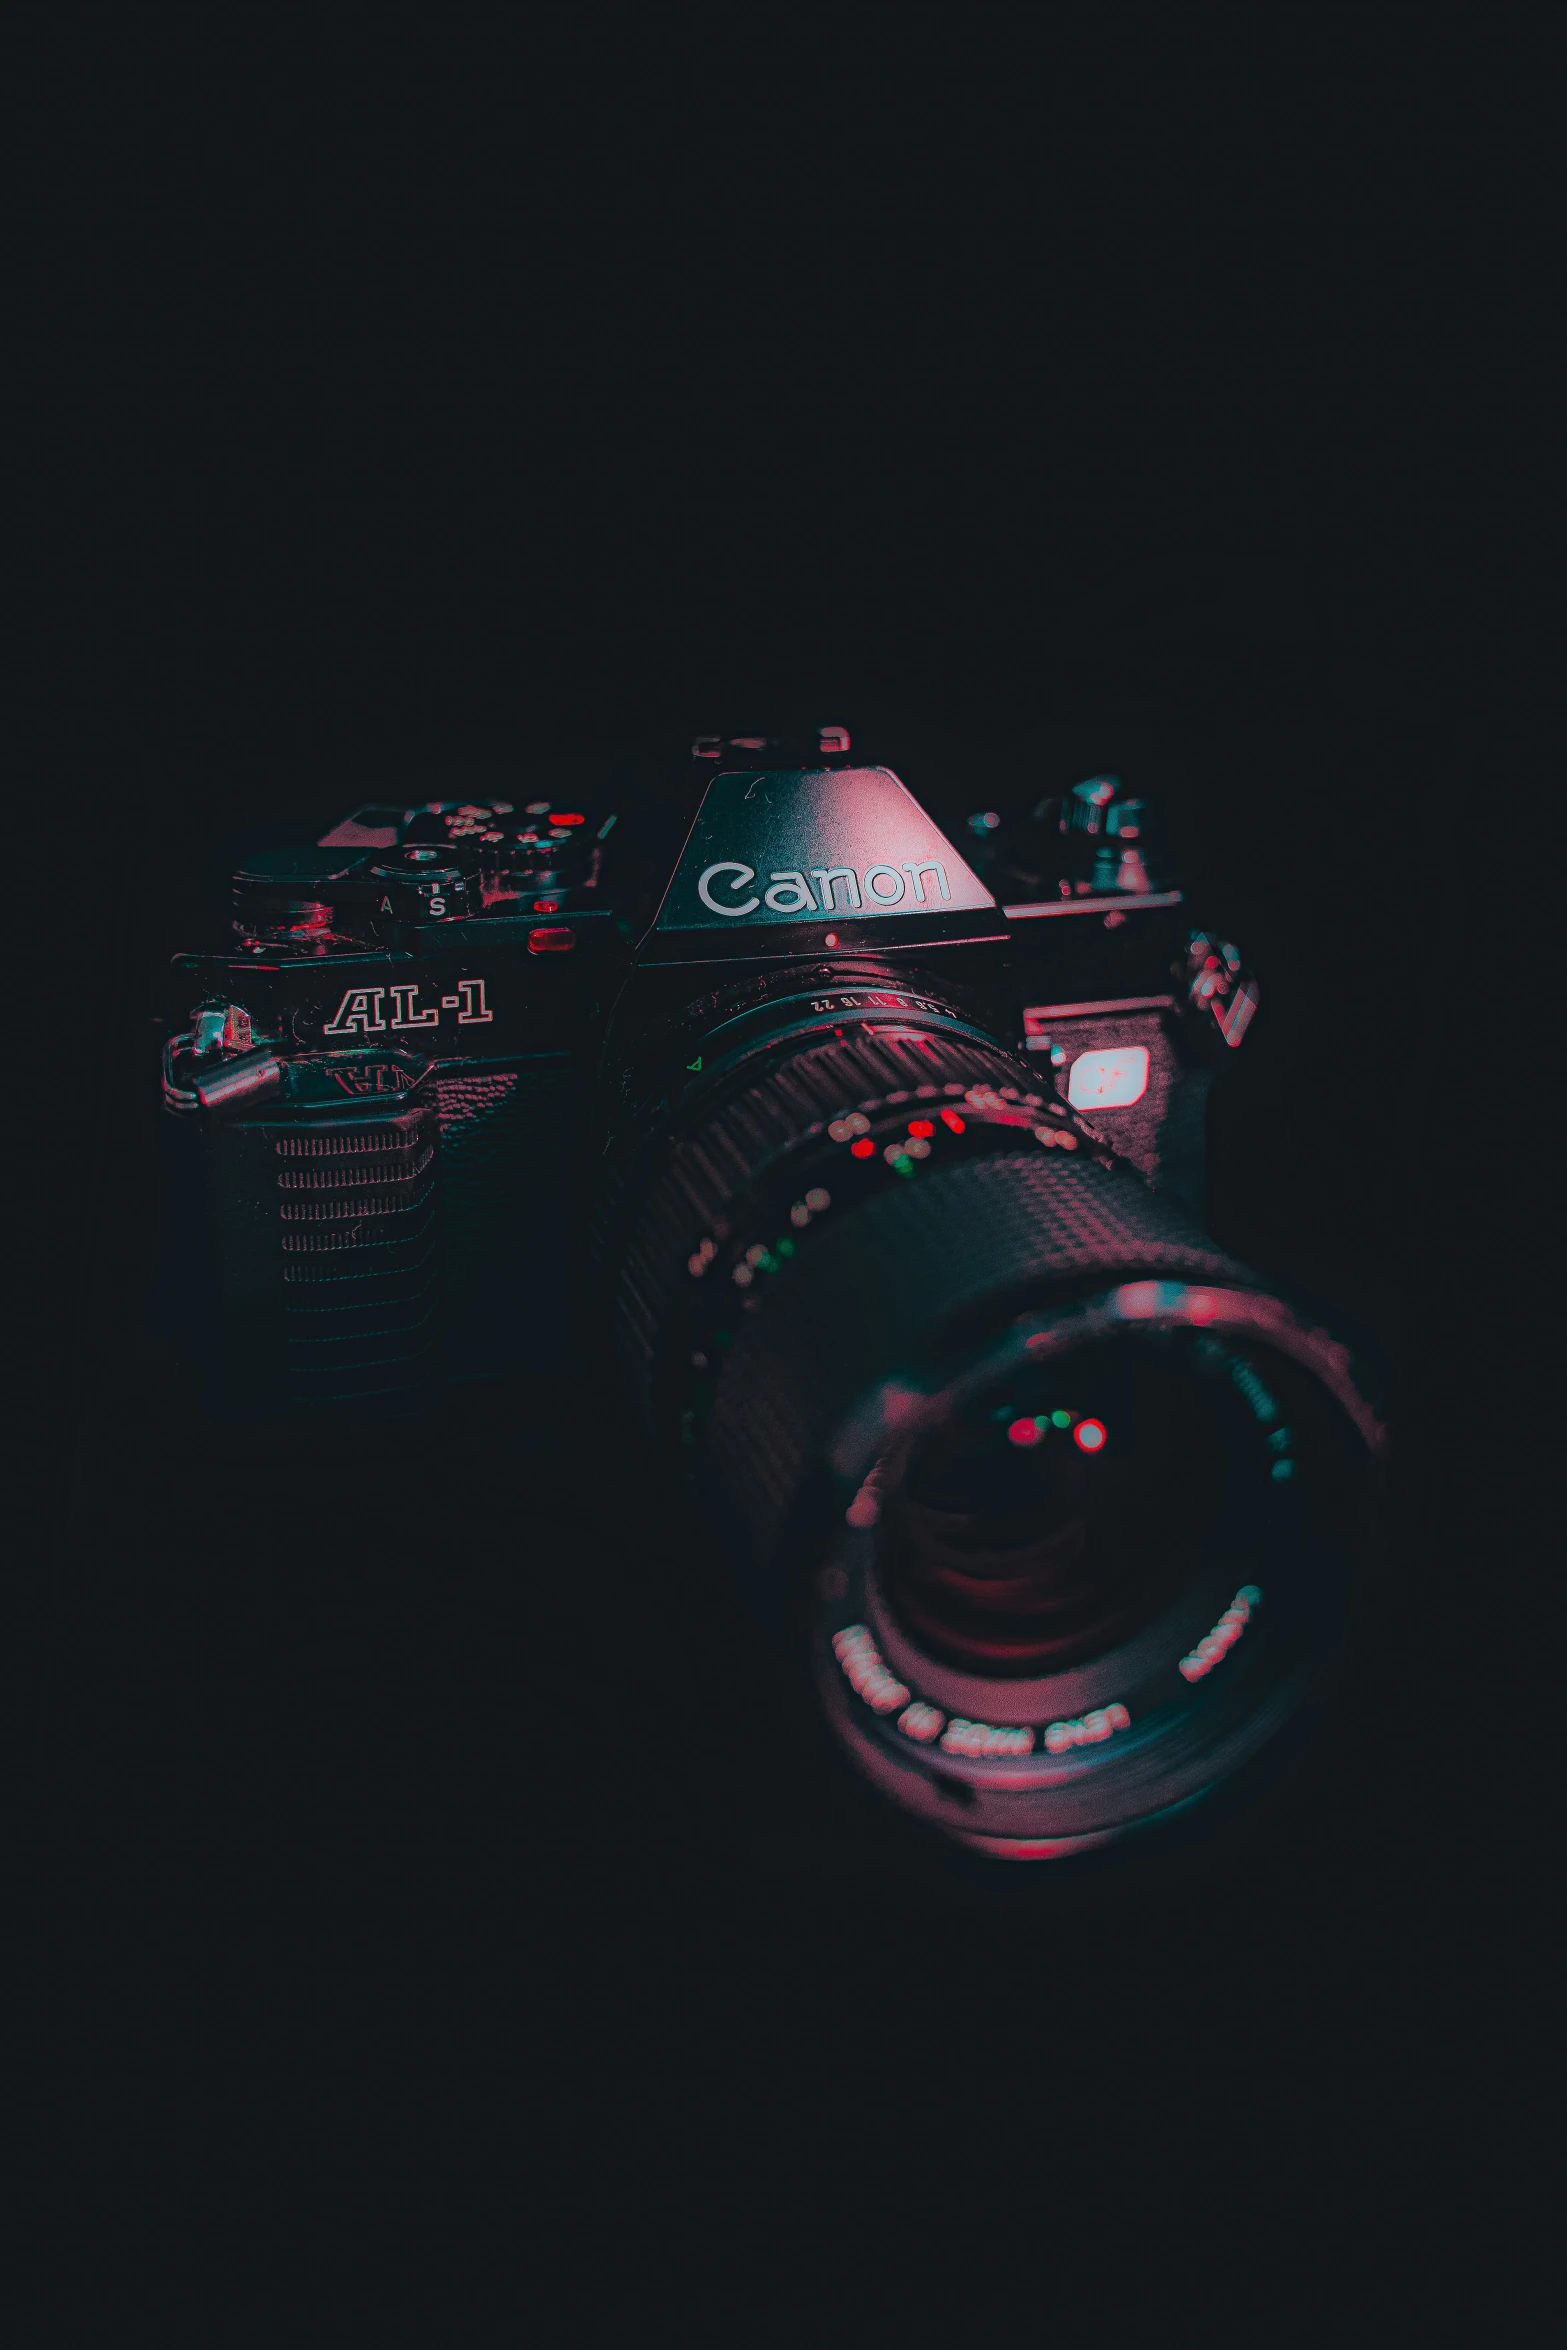 a po of a digital camera taken at night